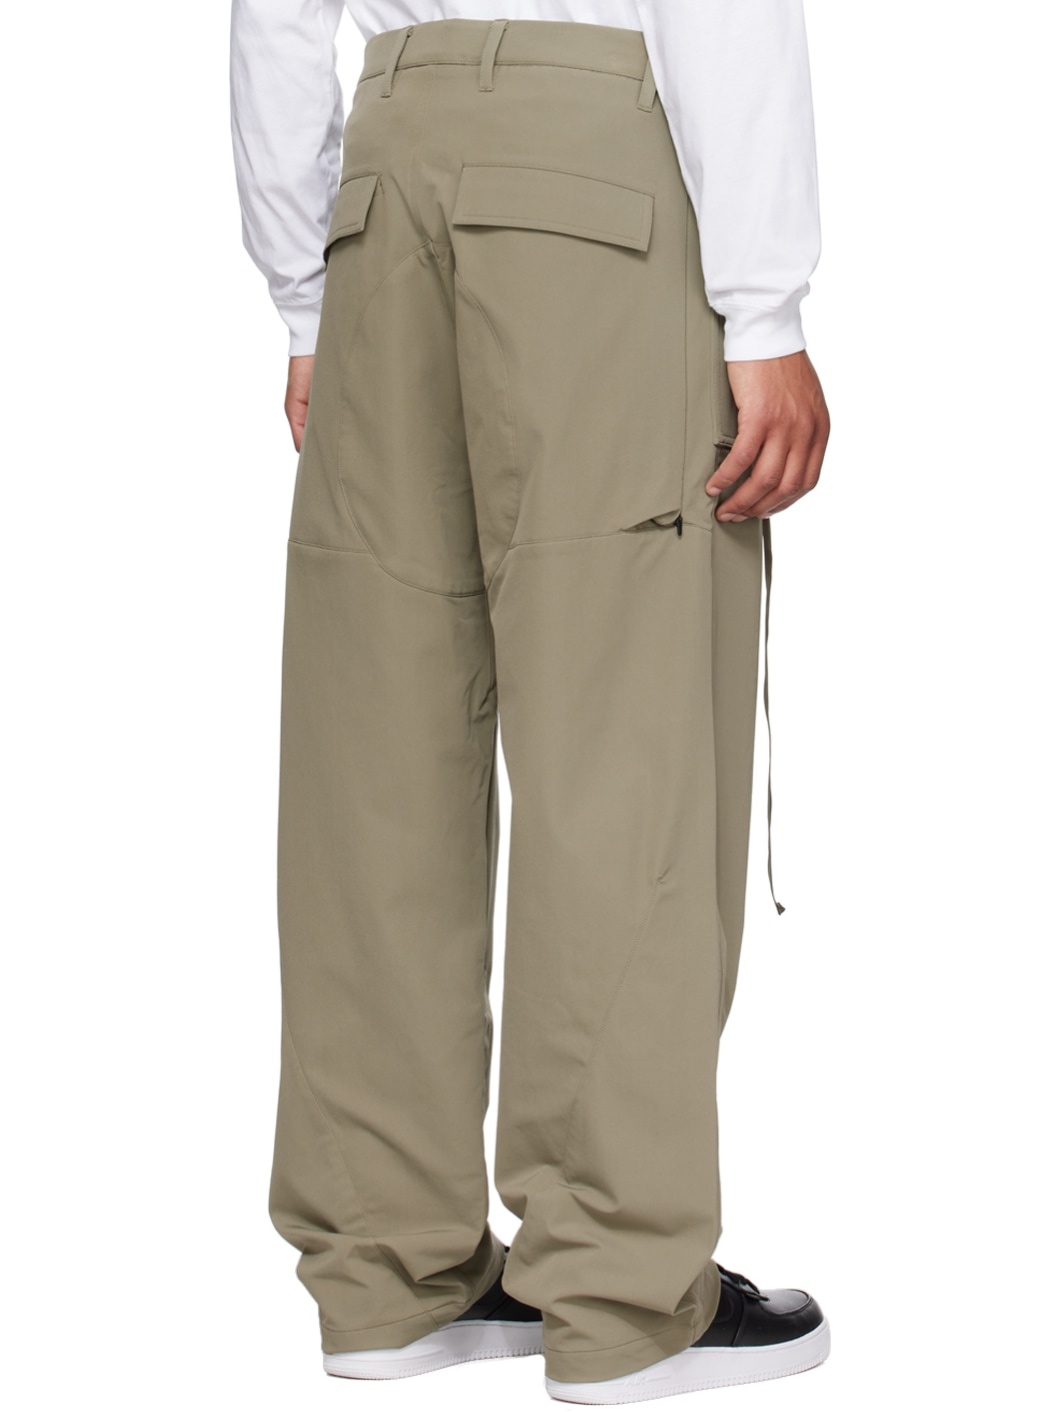 Khaki Dryskin Trousers - 3